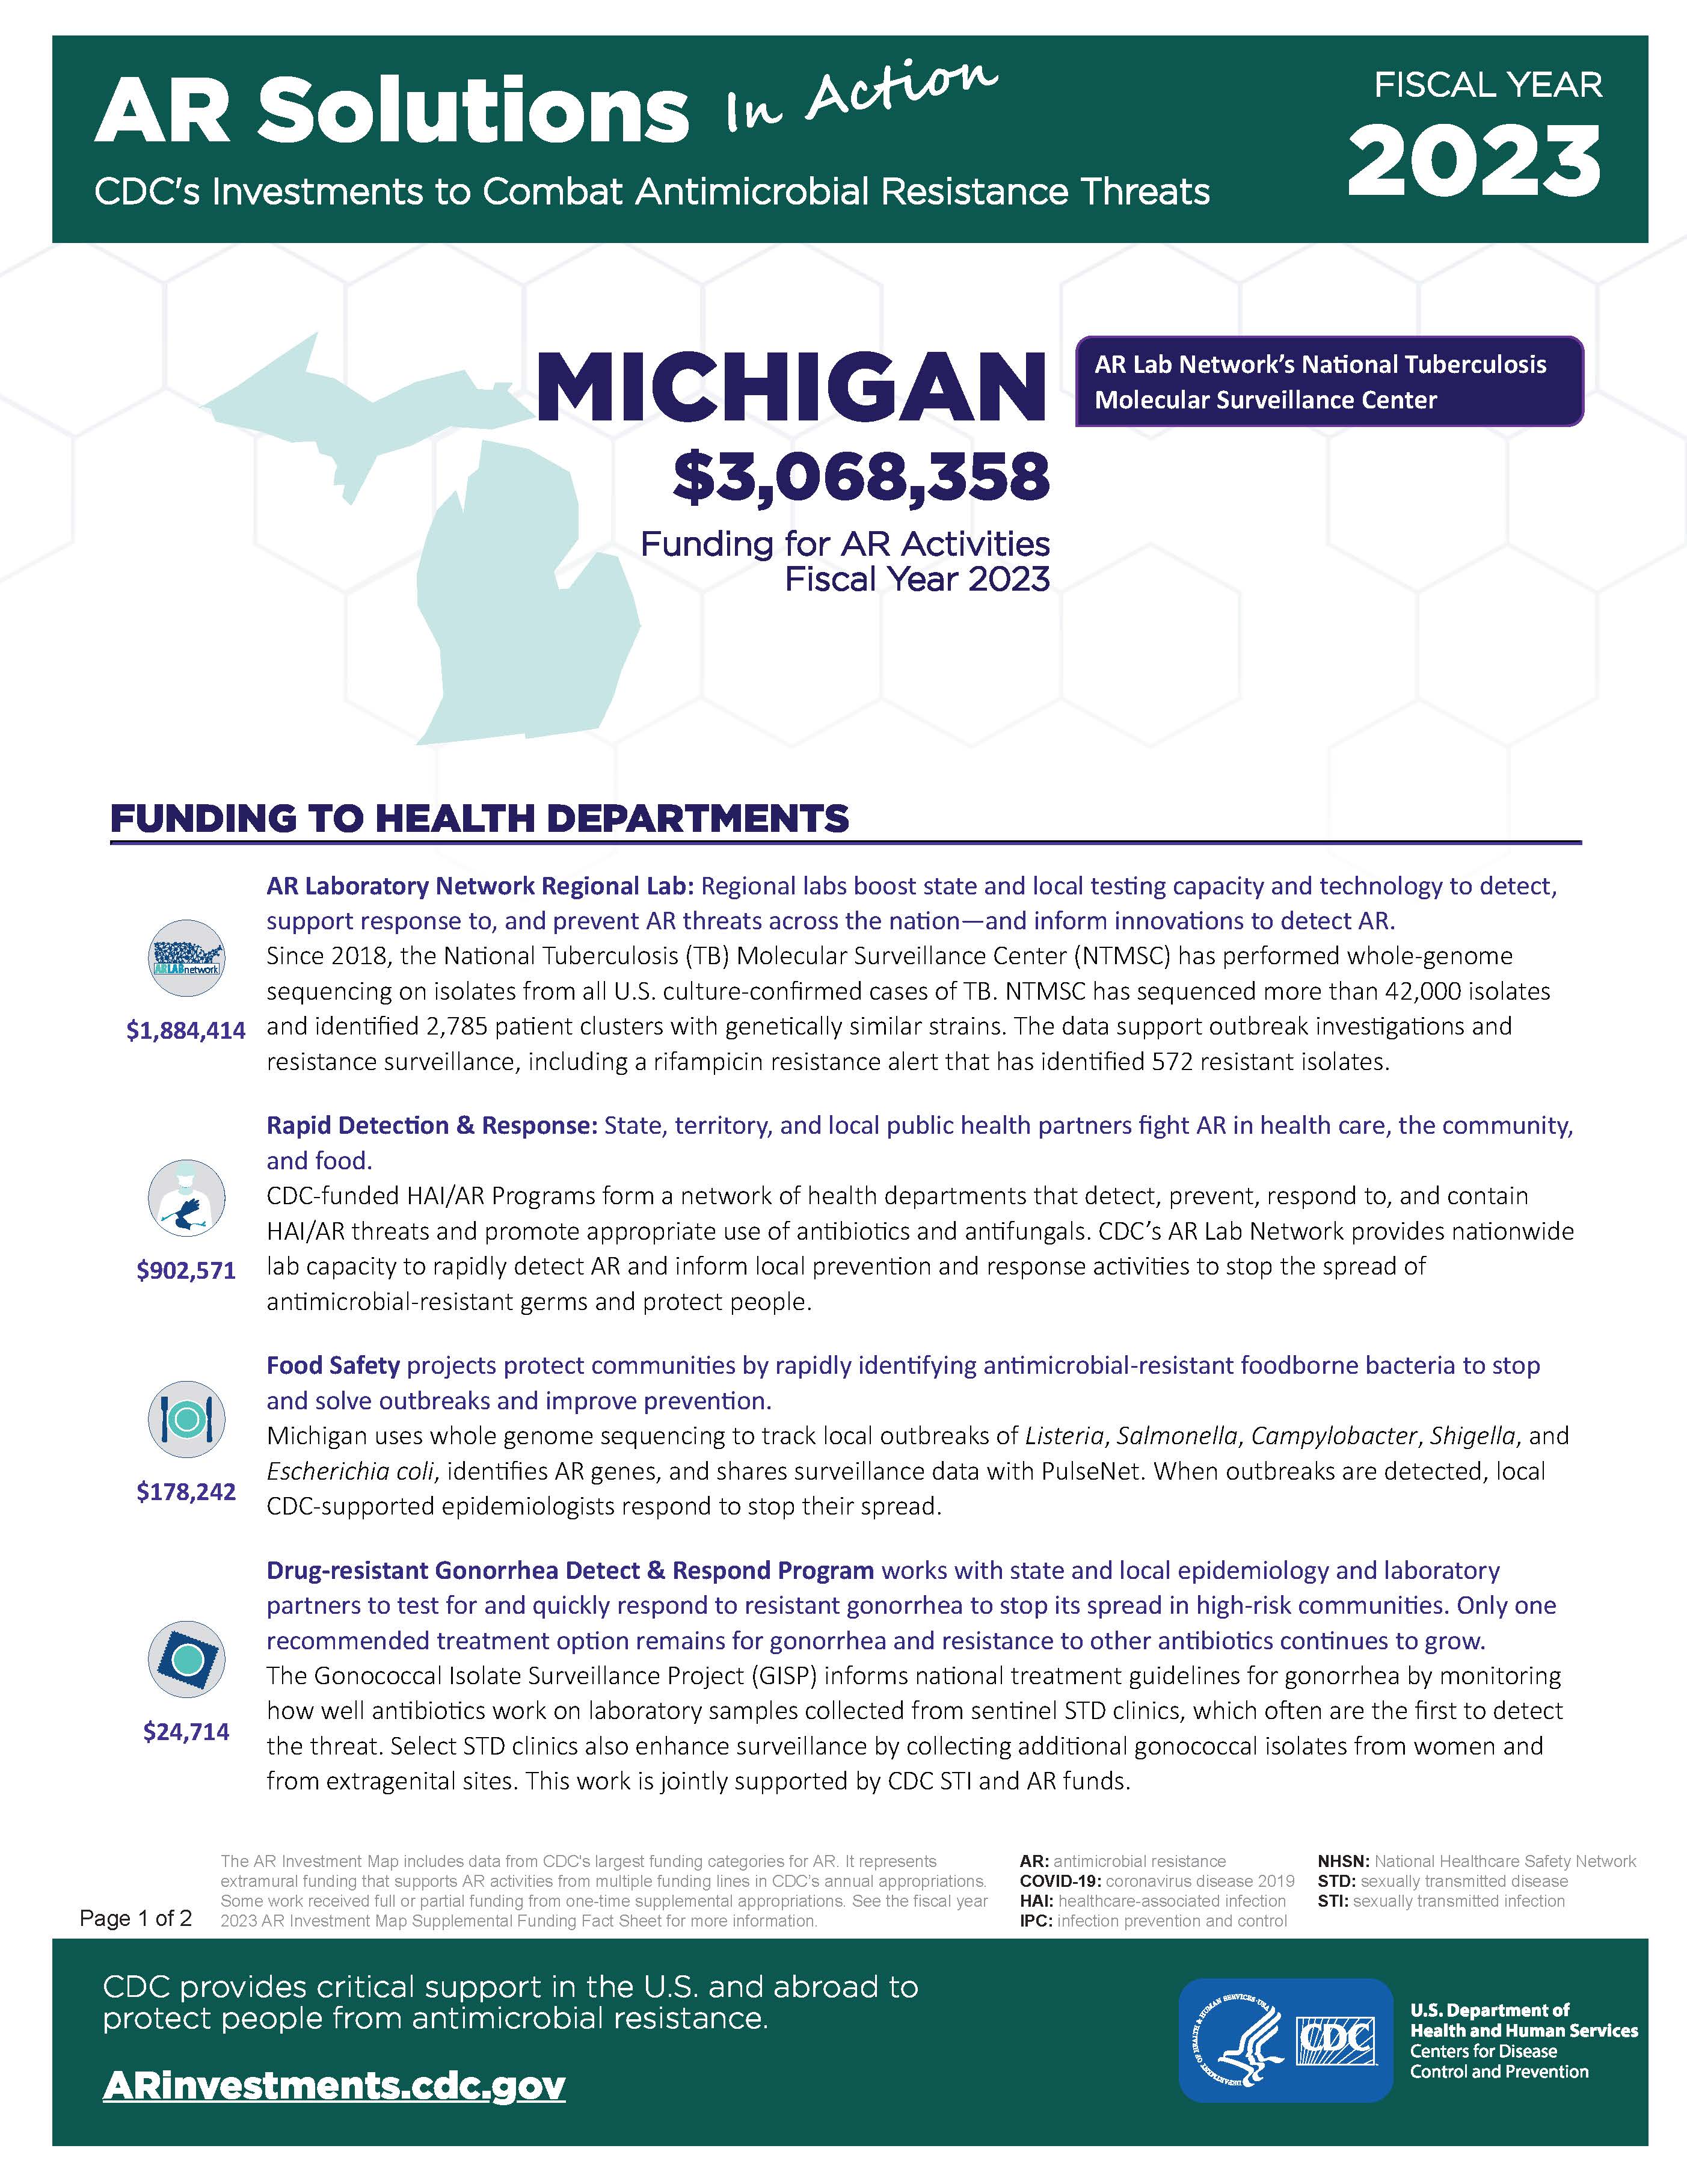 View Factsheet for Michigan